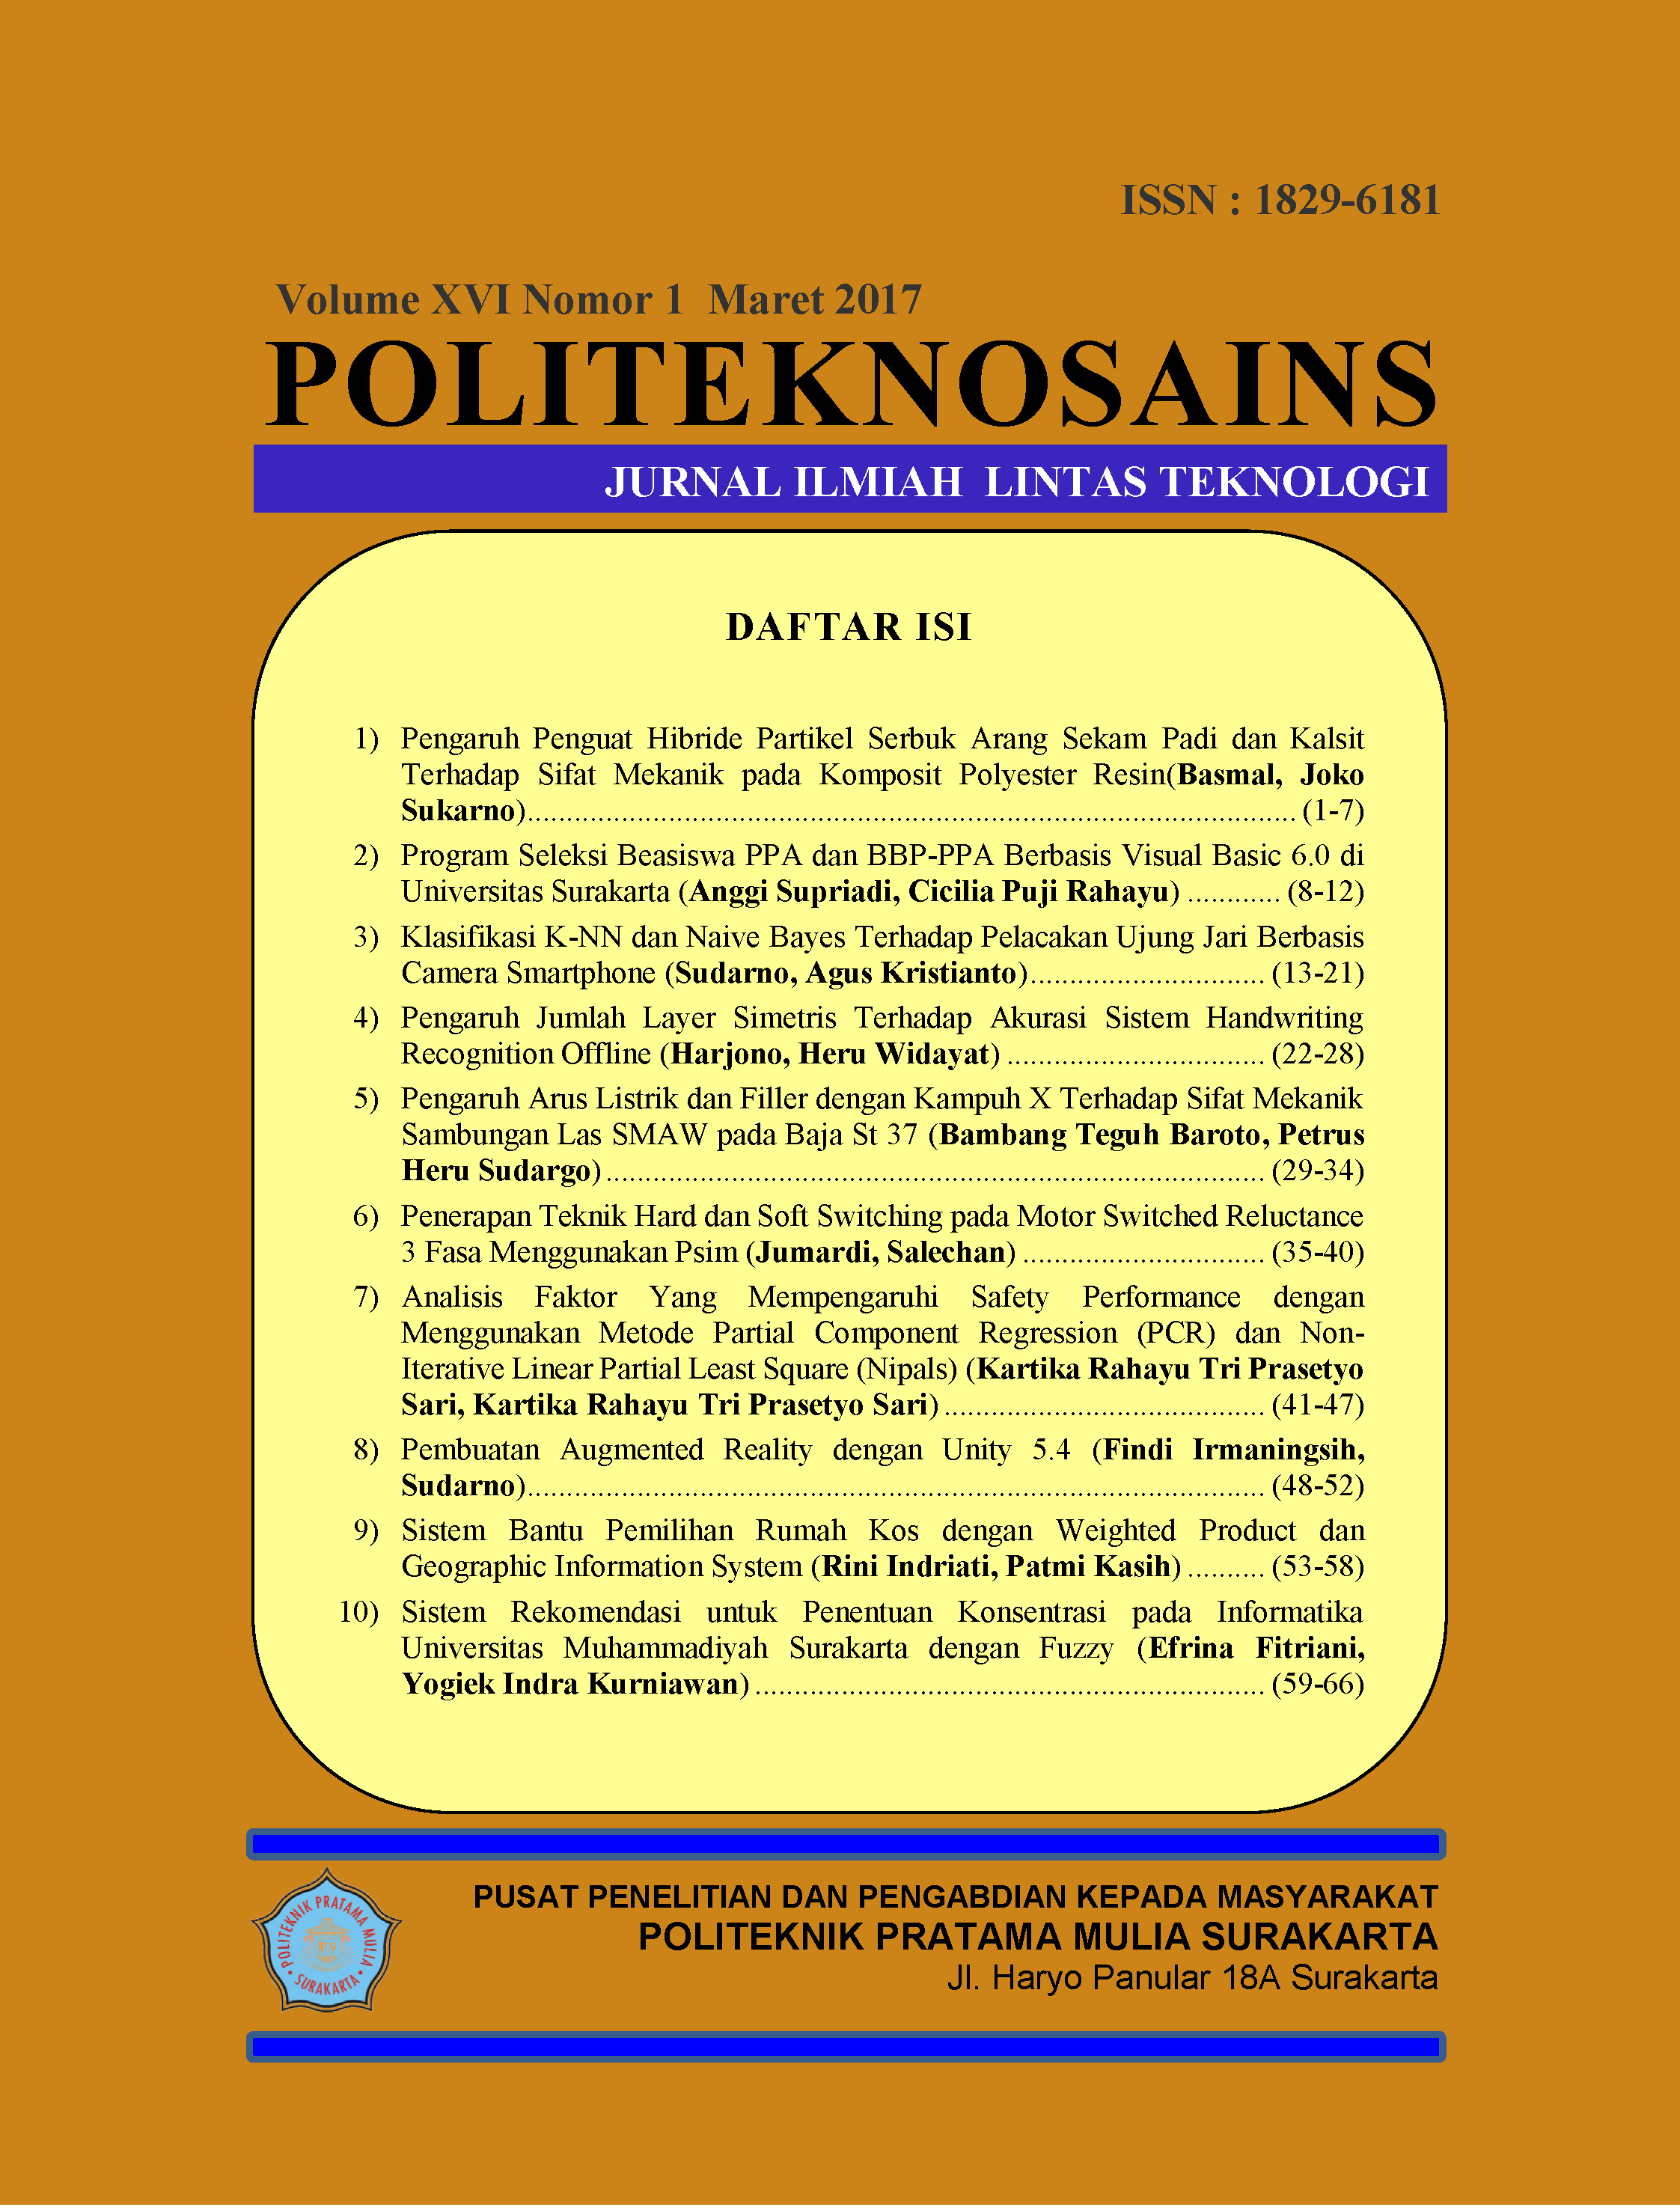 					Lihat Vol 16 No 1 (2017): Jurnal Politeknosains Volume 16 Nomor 1 - Maret  2017
				